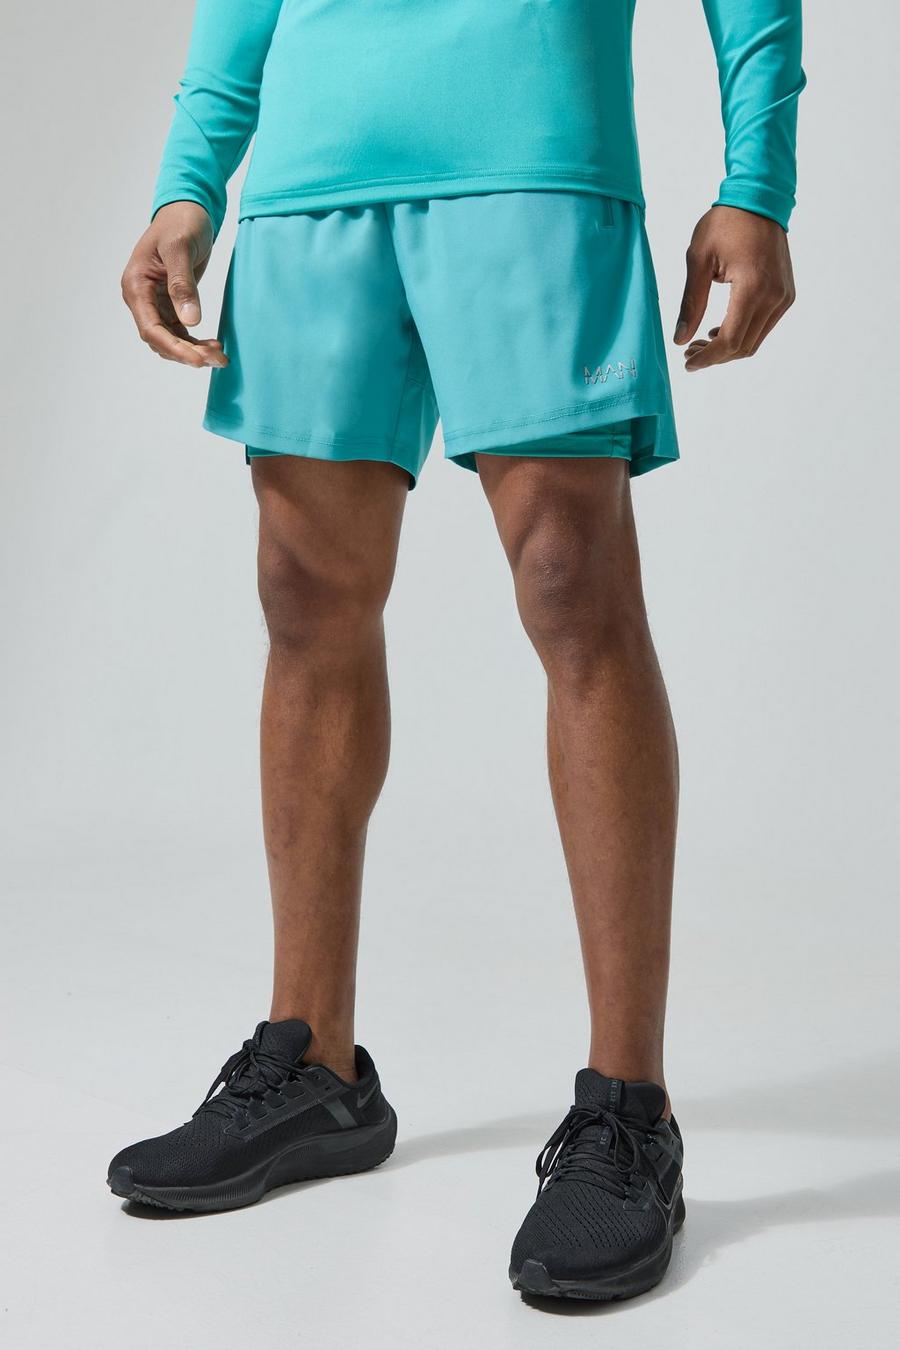 Men's Sports Shorts, Men's Activewear Shorts